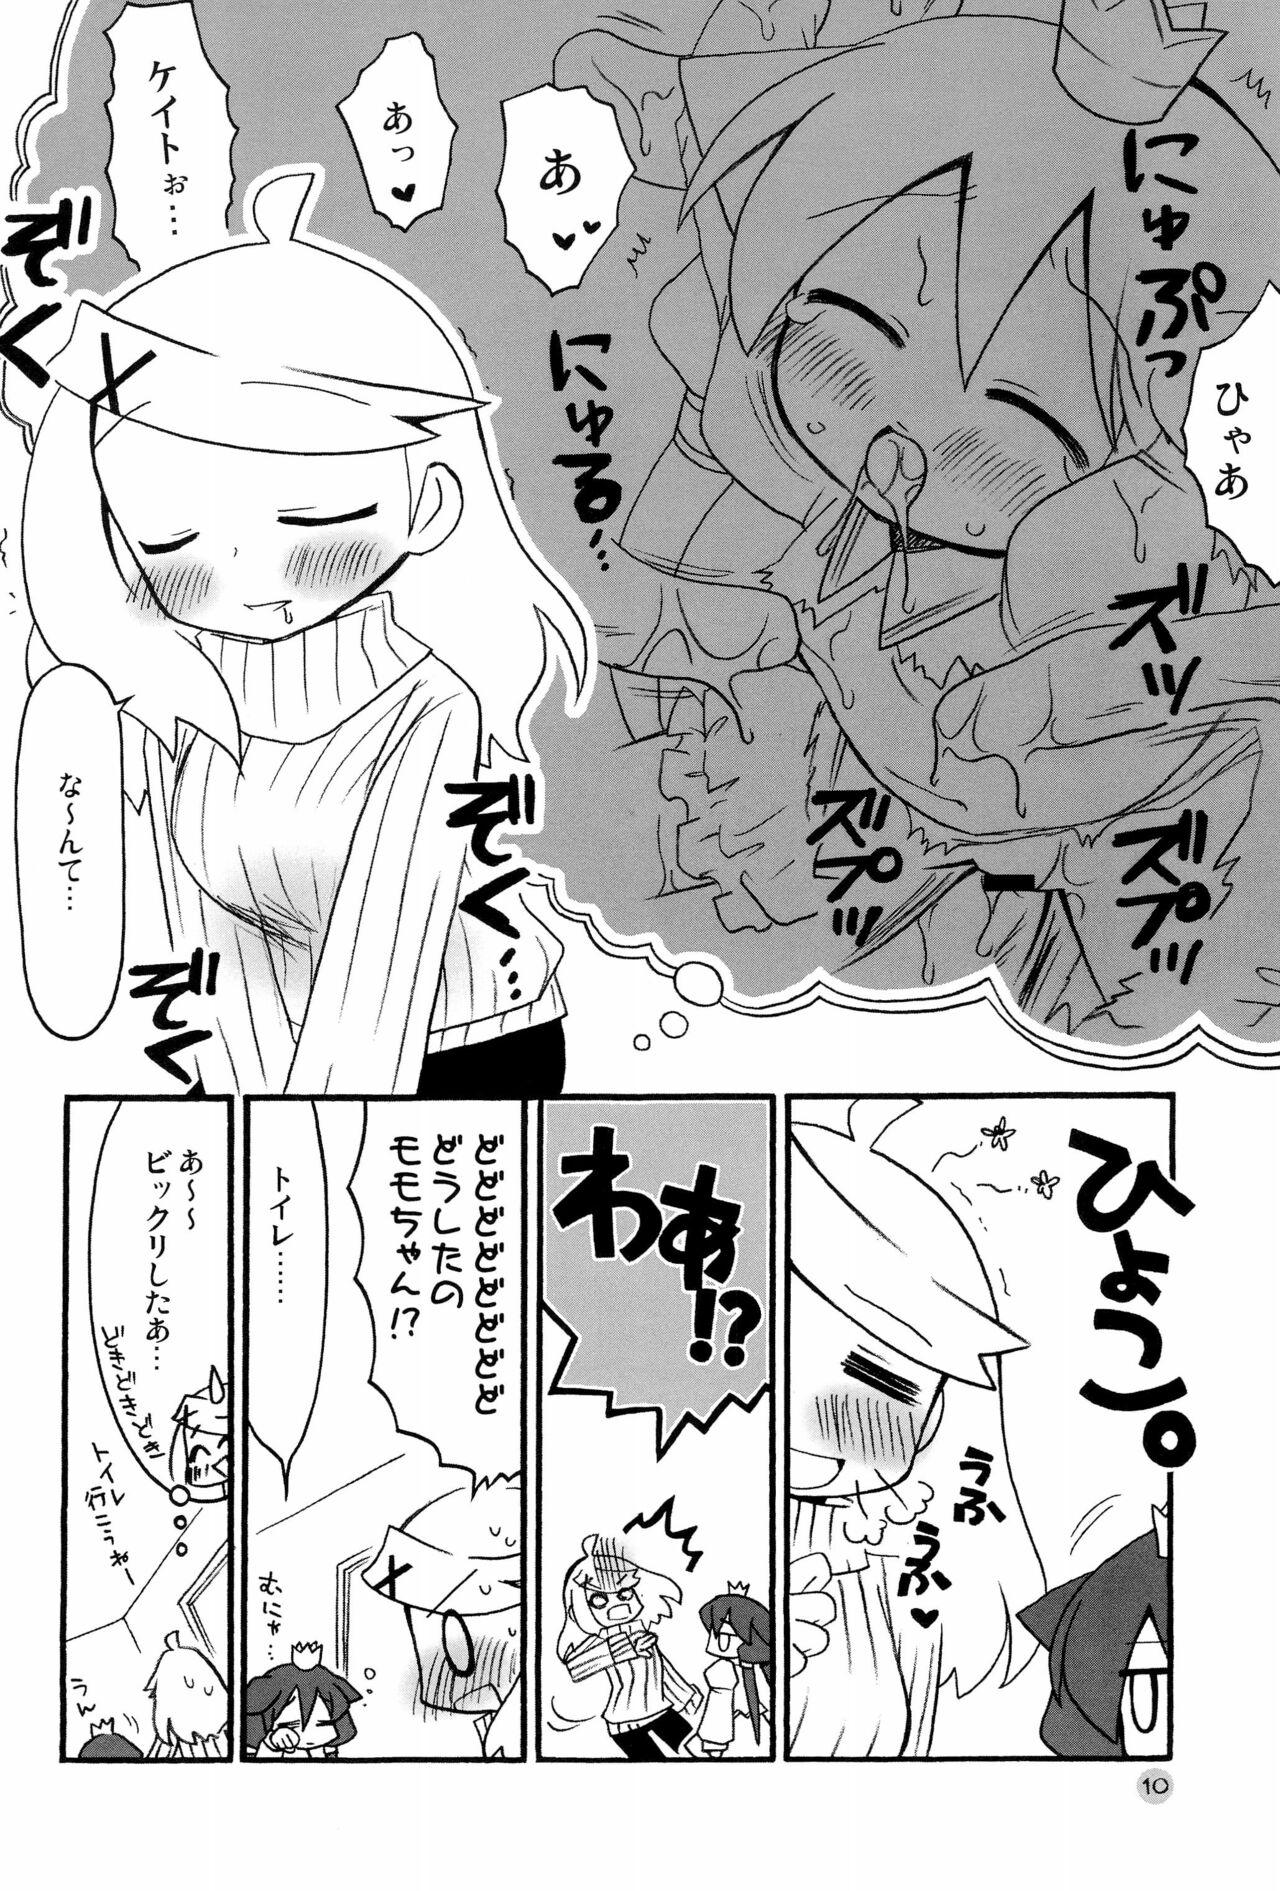 Little Harumomo no Tsubomi - 7th dragon Nylon - Page 10